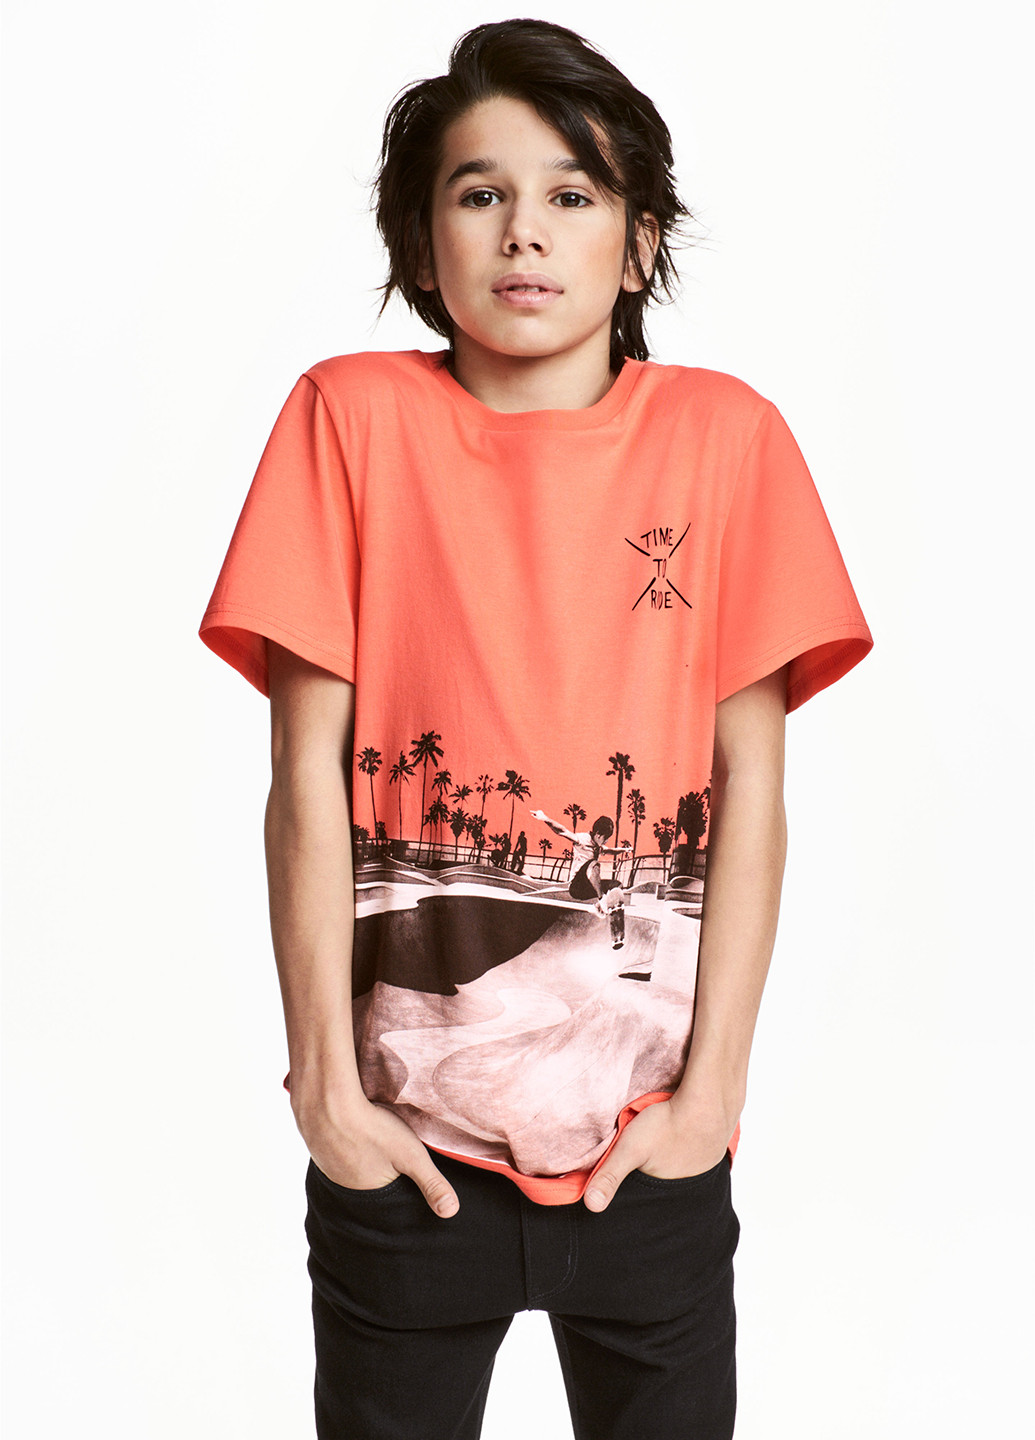 Коралловая летняя футболка с коротким рукавом H&M